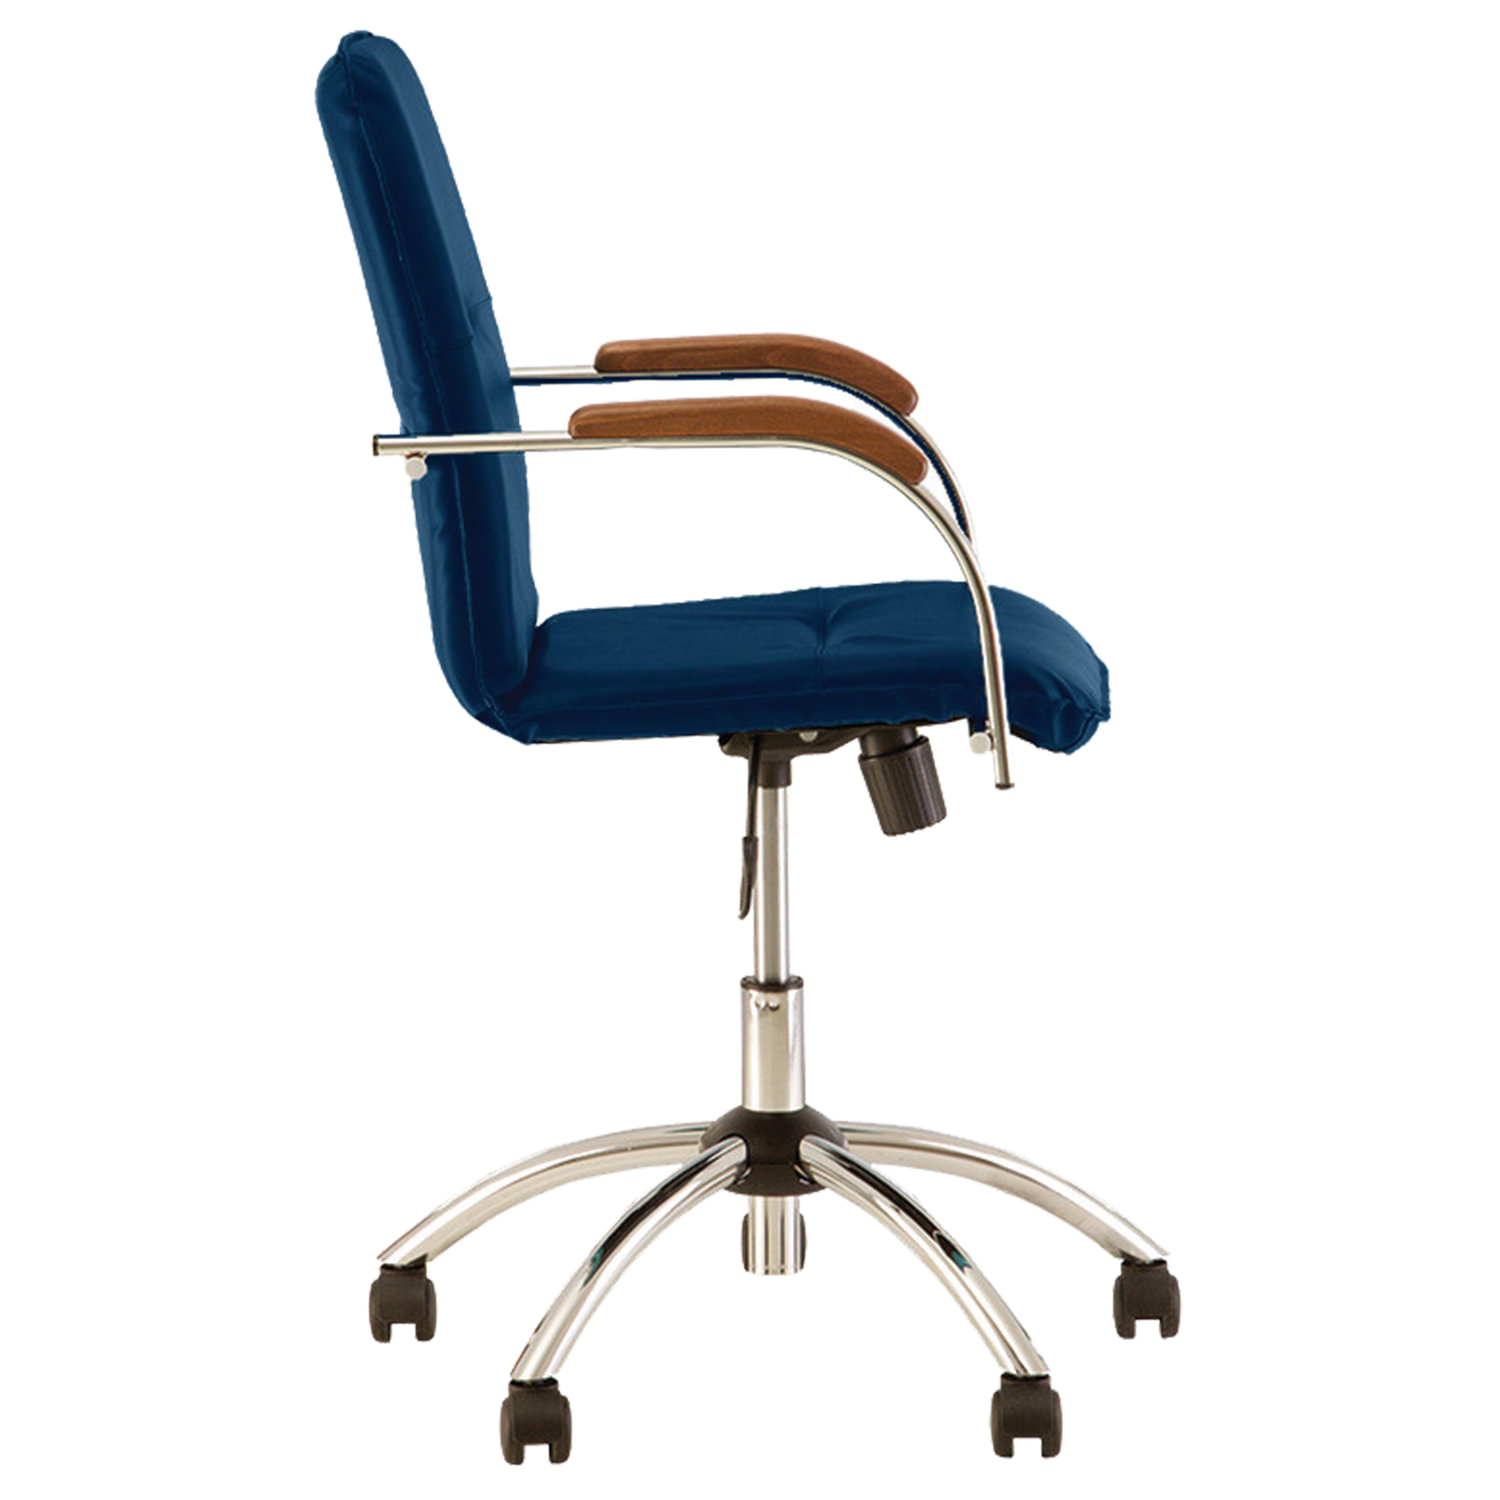 Кресло Samba GTP, деревянные накладки, хром, кожзам, синий